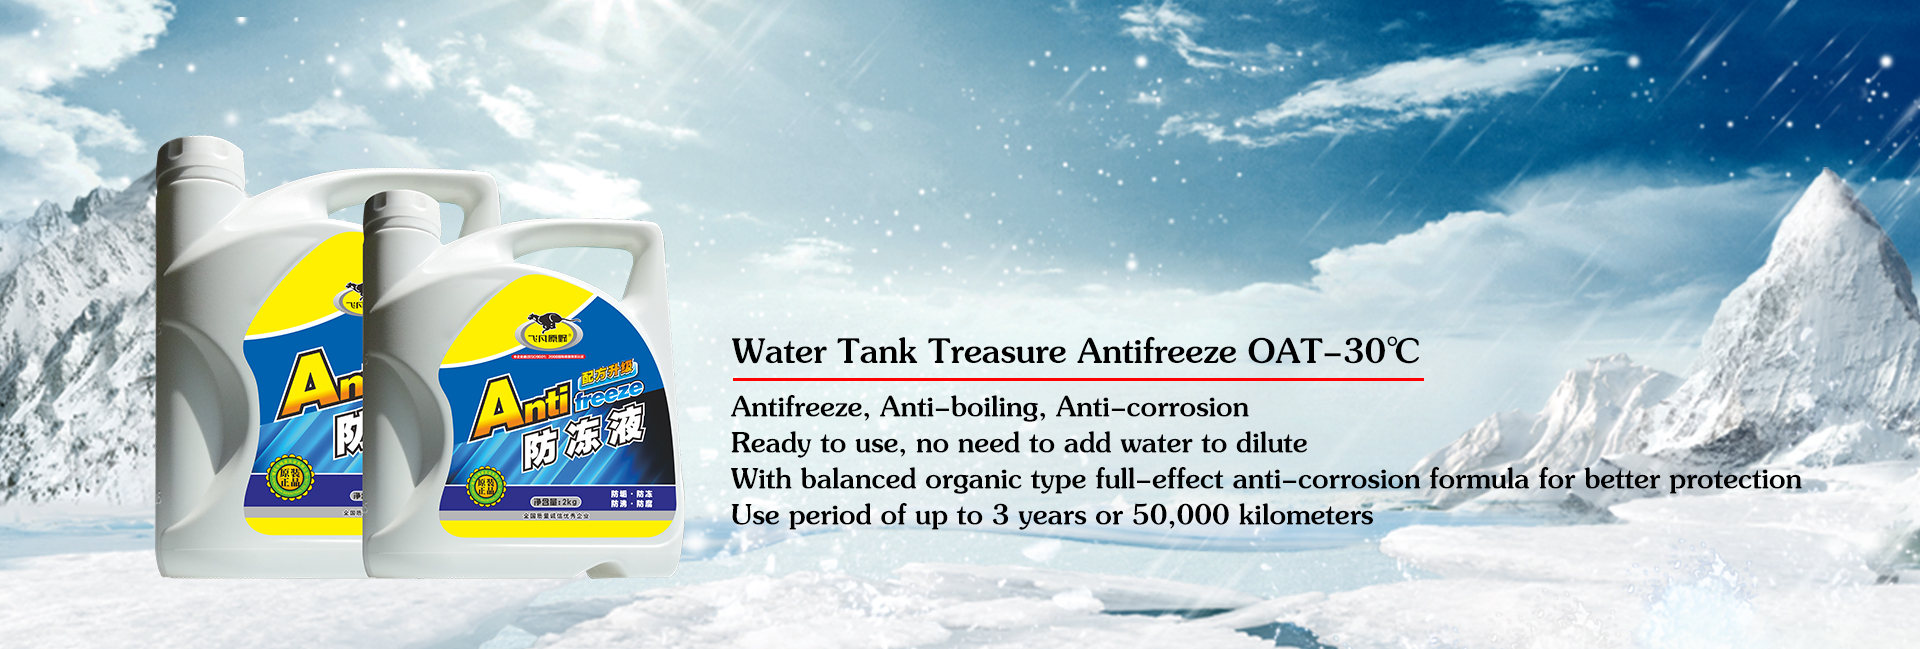 Water Tank Treasure Antifreeze